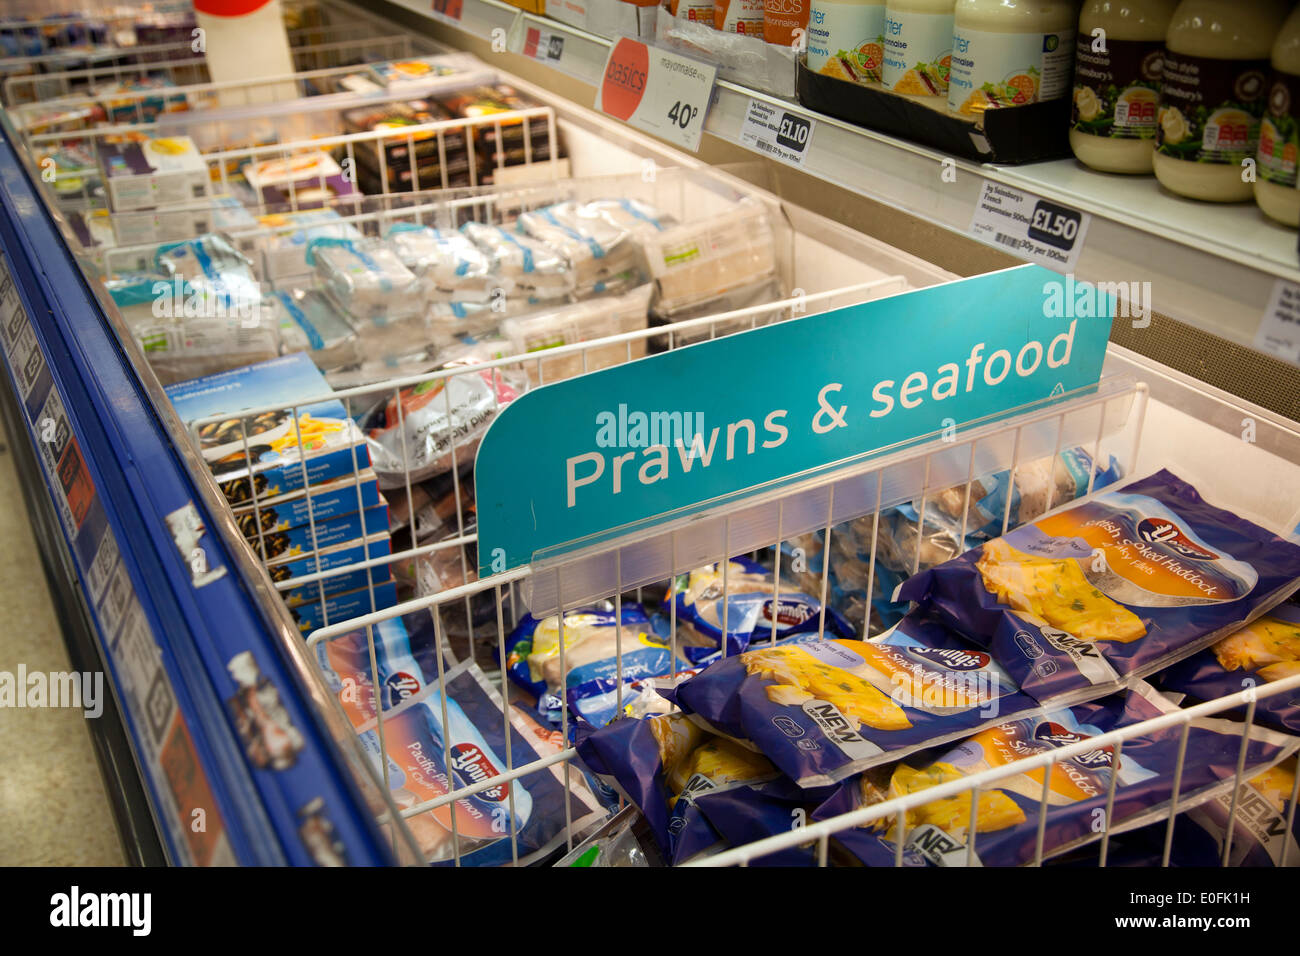 Frozen Prawns and Seafood Sign Fridge - London UK Stock Photo